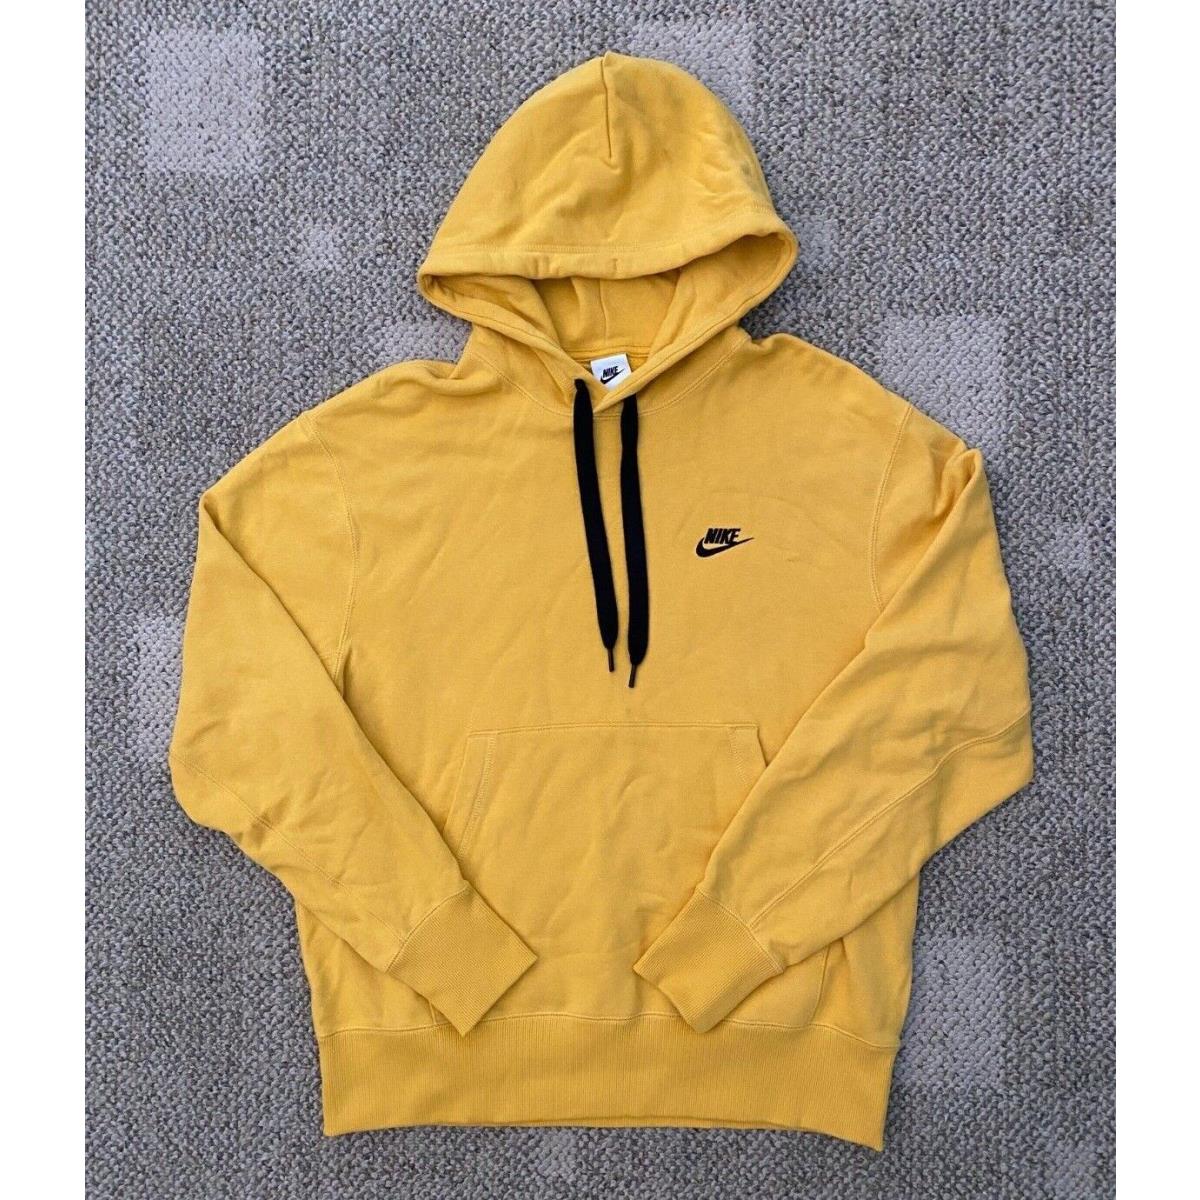 Nike clothing  - Pollen Yellow 0